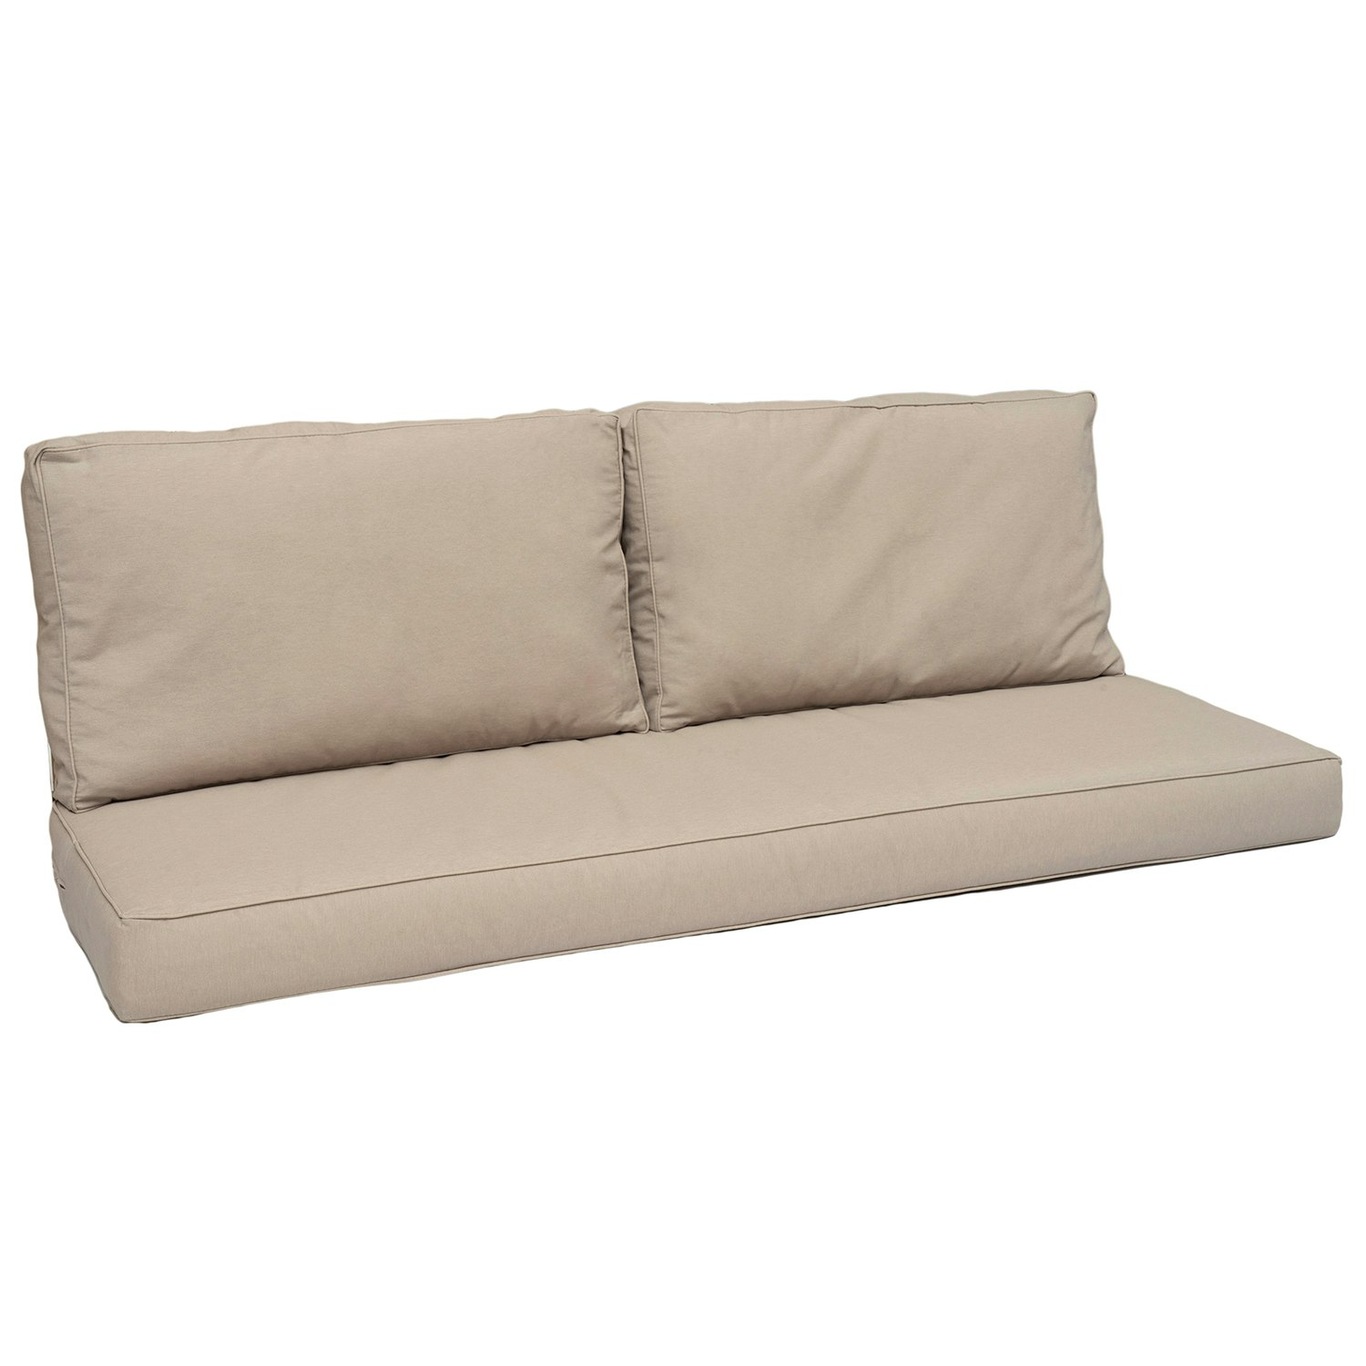 Gotland Cushions For Sofa, Beige